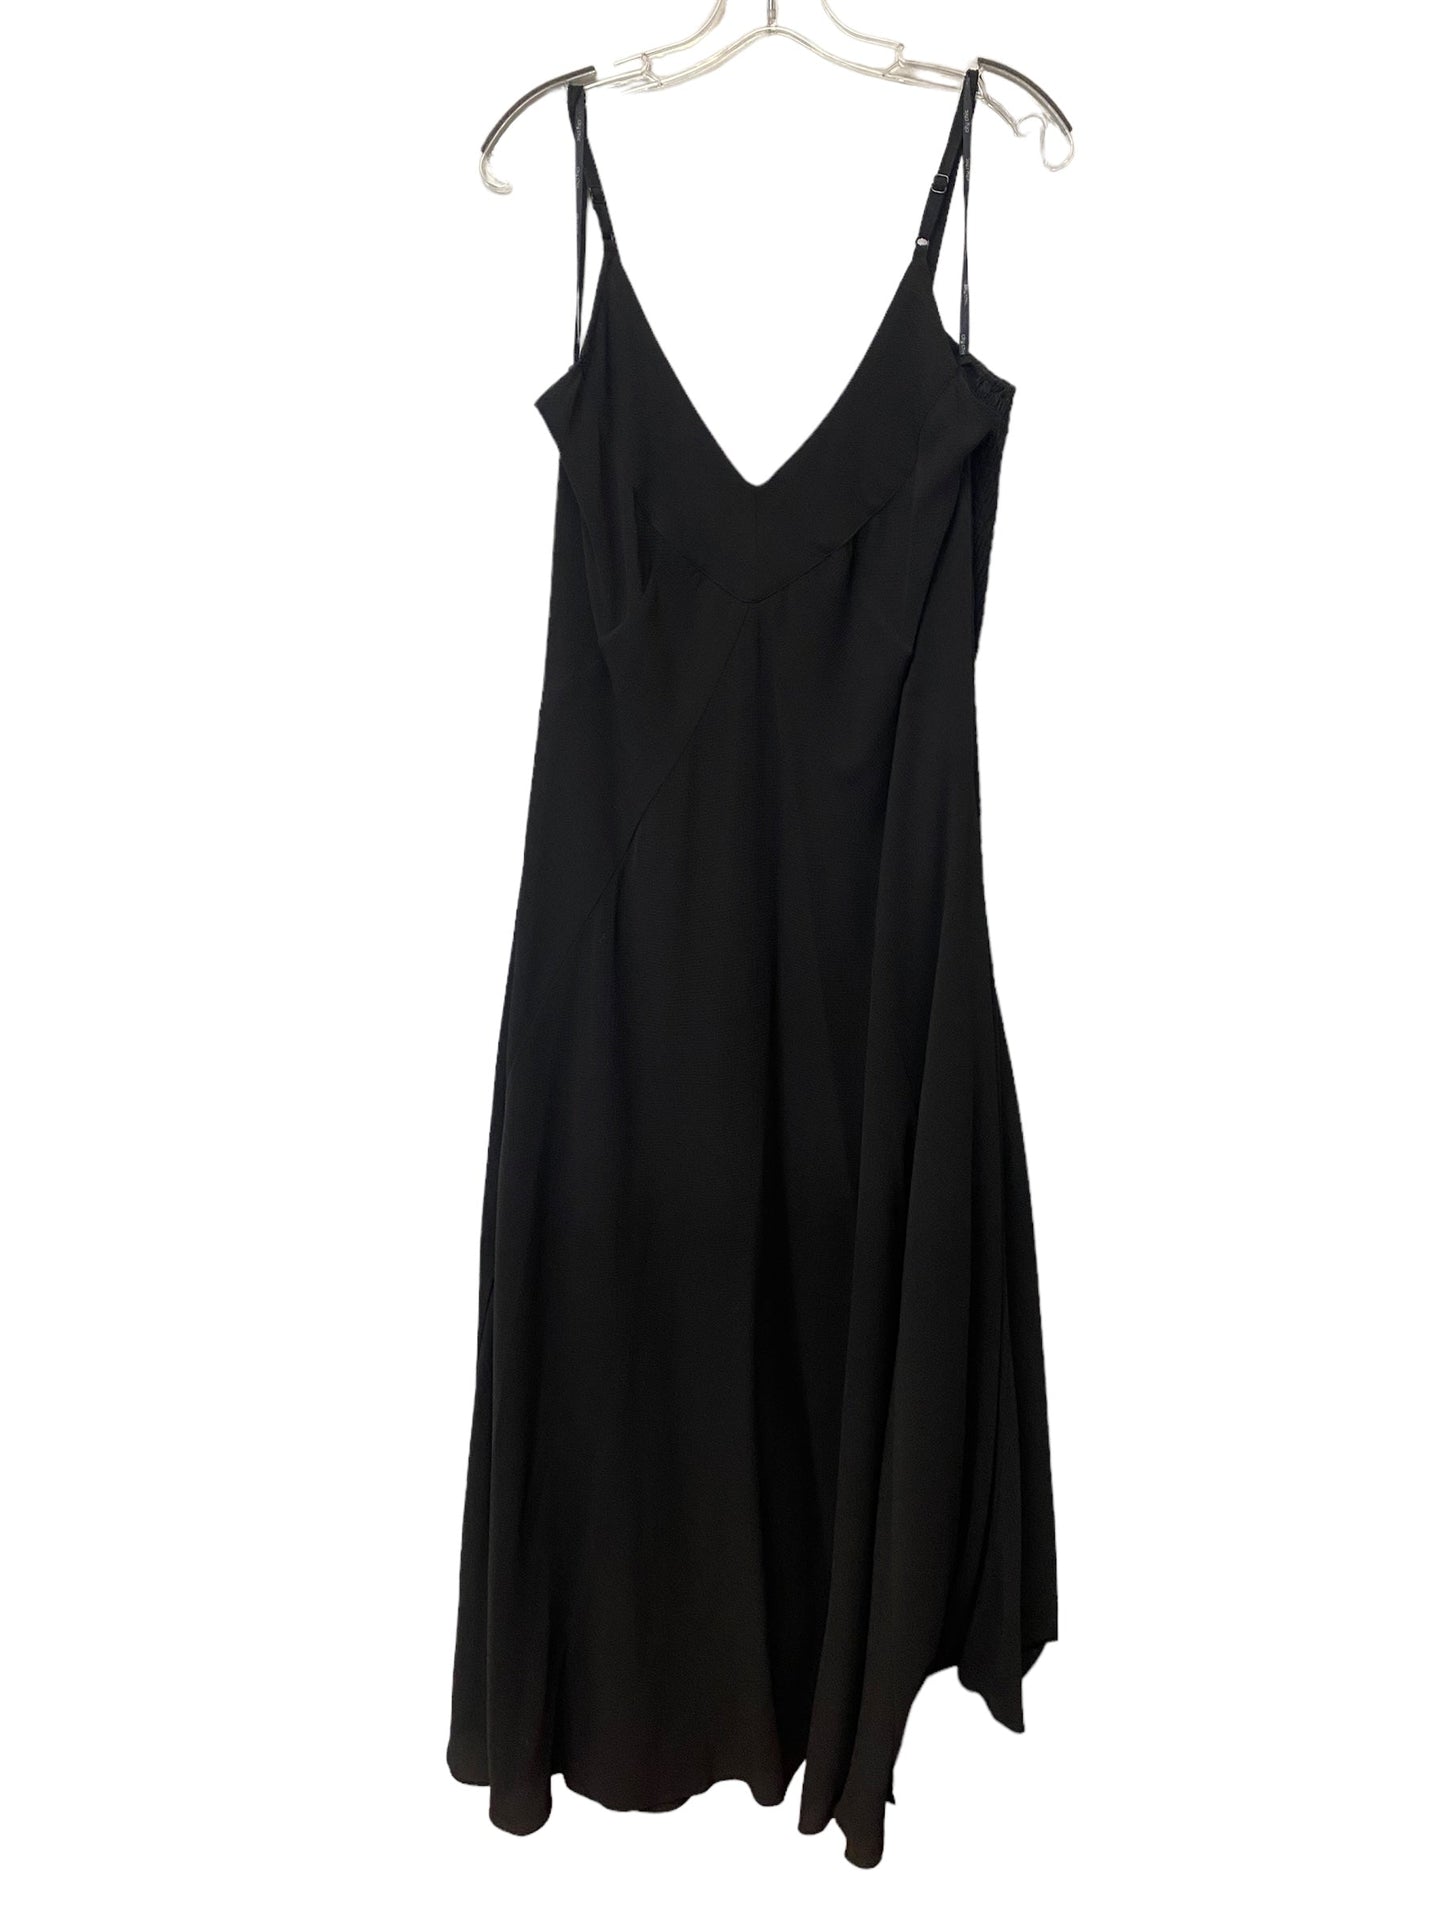 Black Dress Casual Maxi City Chic, Size 16